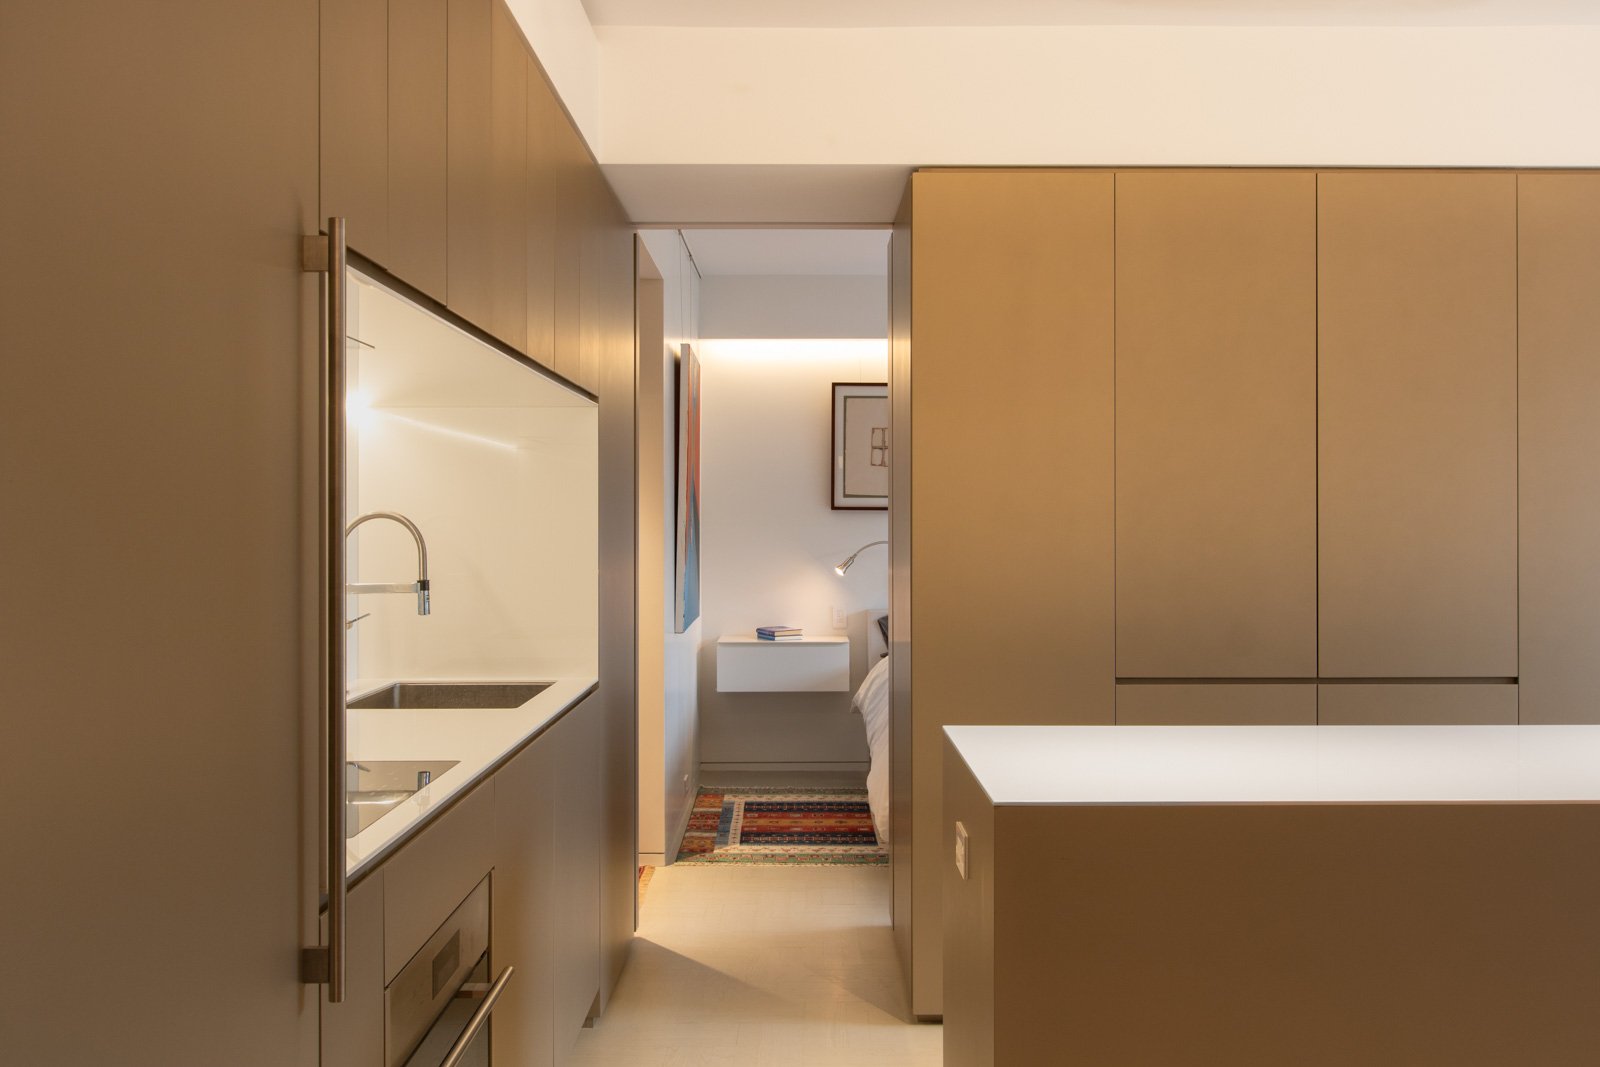 11-res4-resolution-4-architecture-modern-apartment-renovation-nyc-pied-a-terre-kitchen-custom-island-cabinets-metallic-millwork-built-ins-hidden-pocket-doors-bedroom.jpg